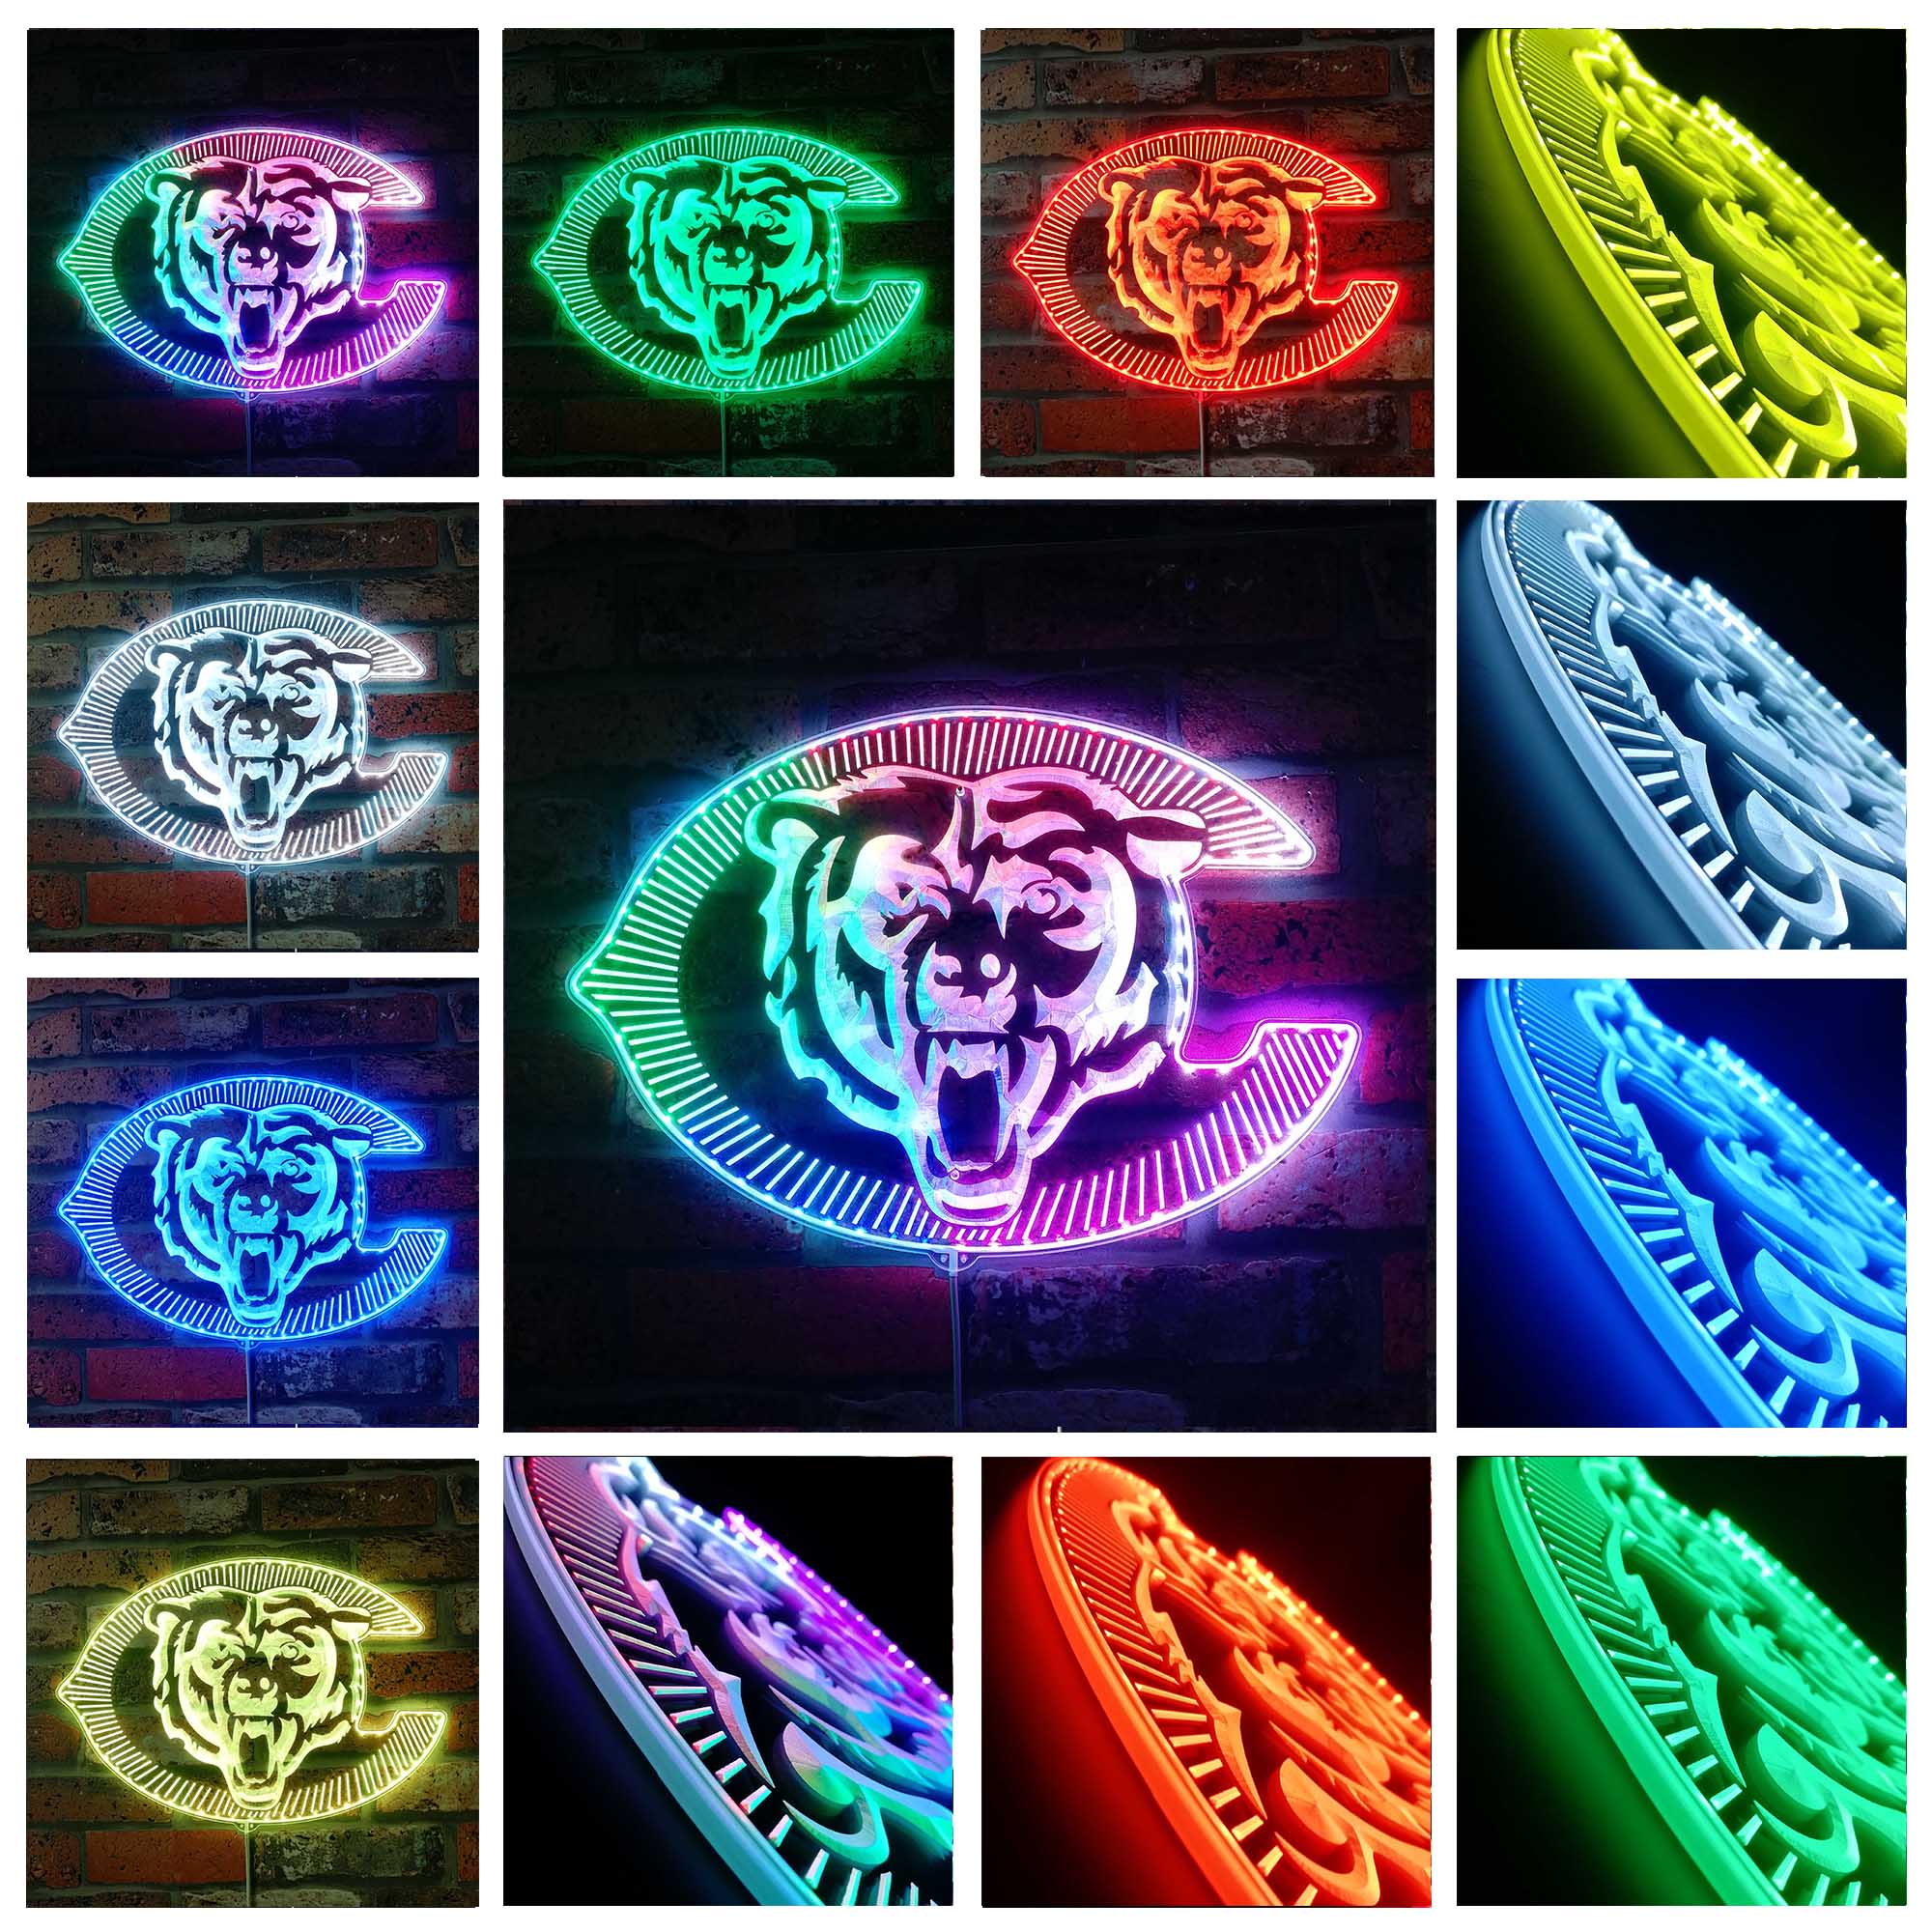 Chicago Bears Dynamic RGB Edge Lit LED Sign